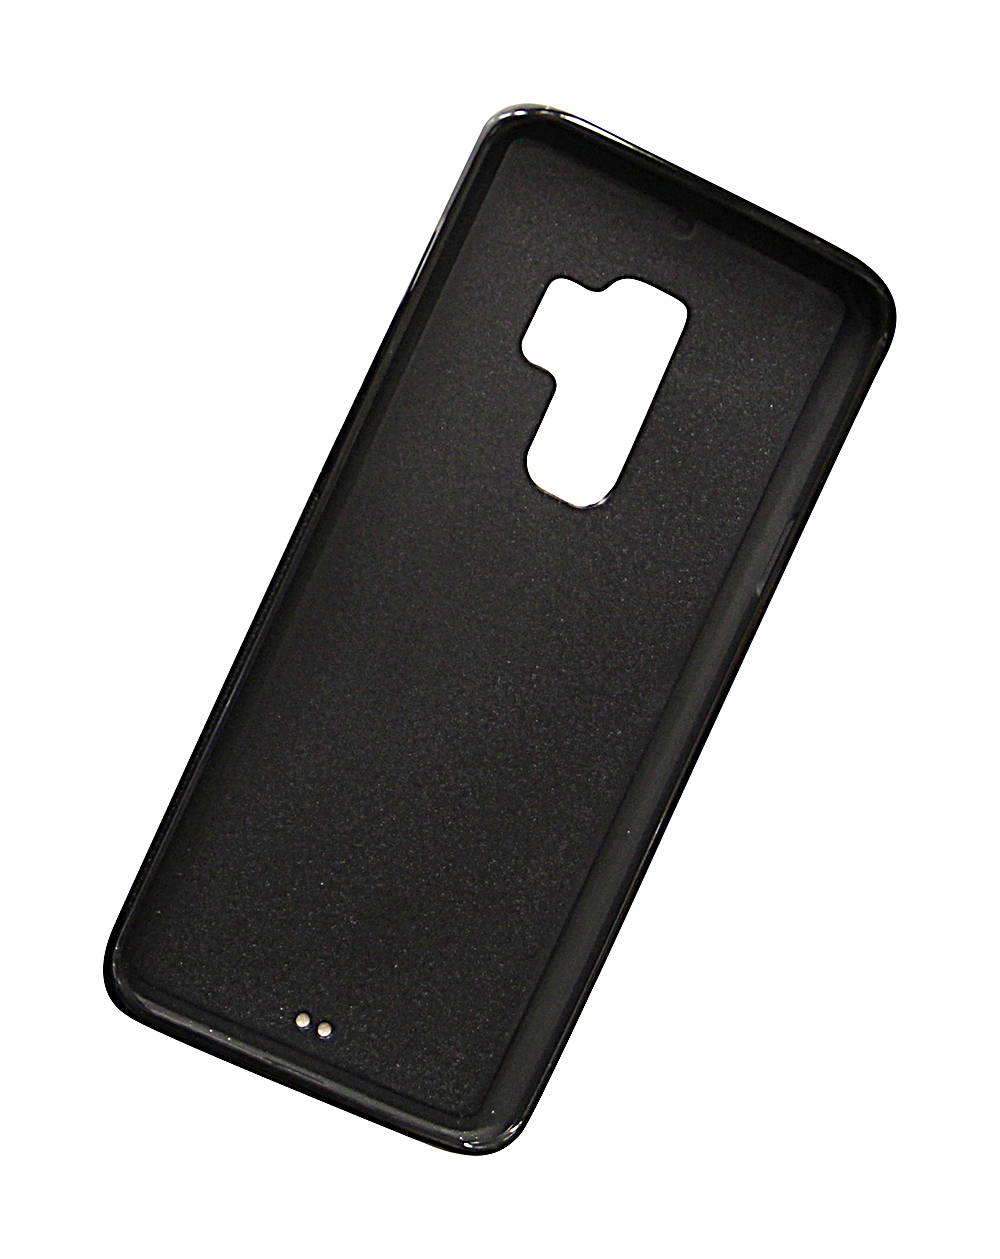 CoverInMagnet Fodral Samsung Galaxy S9 Plus (G965F)